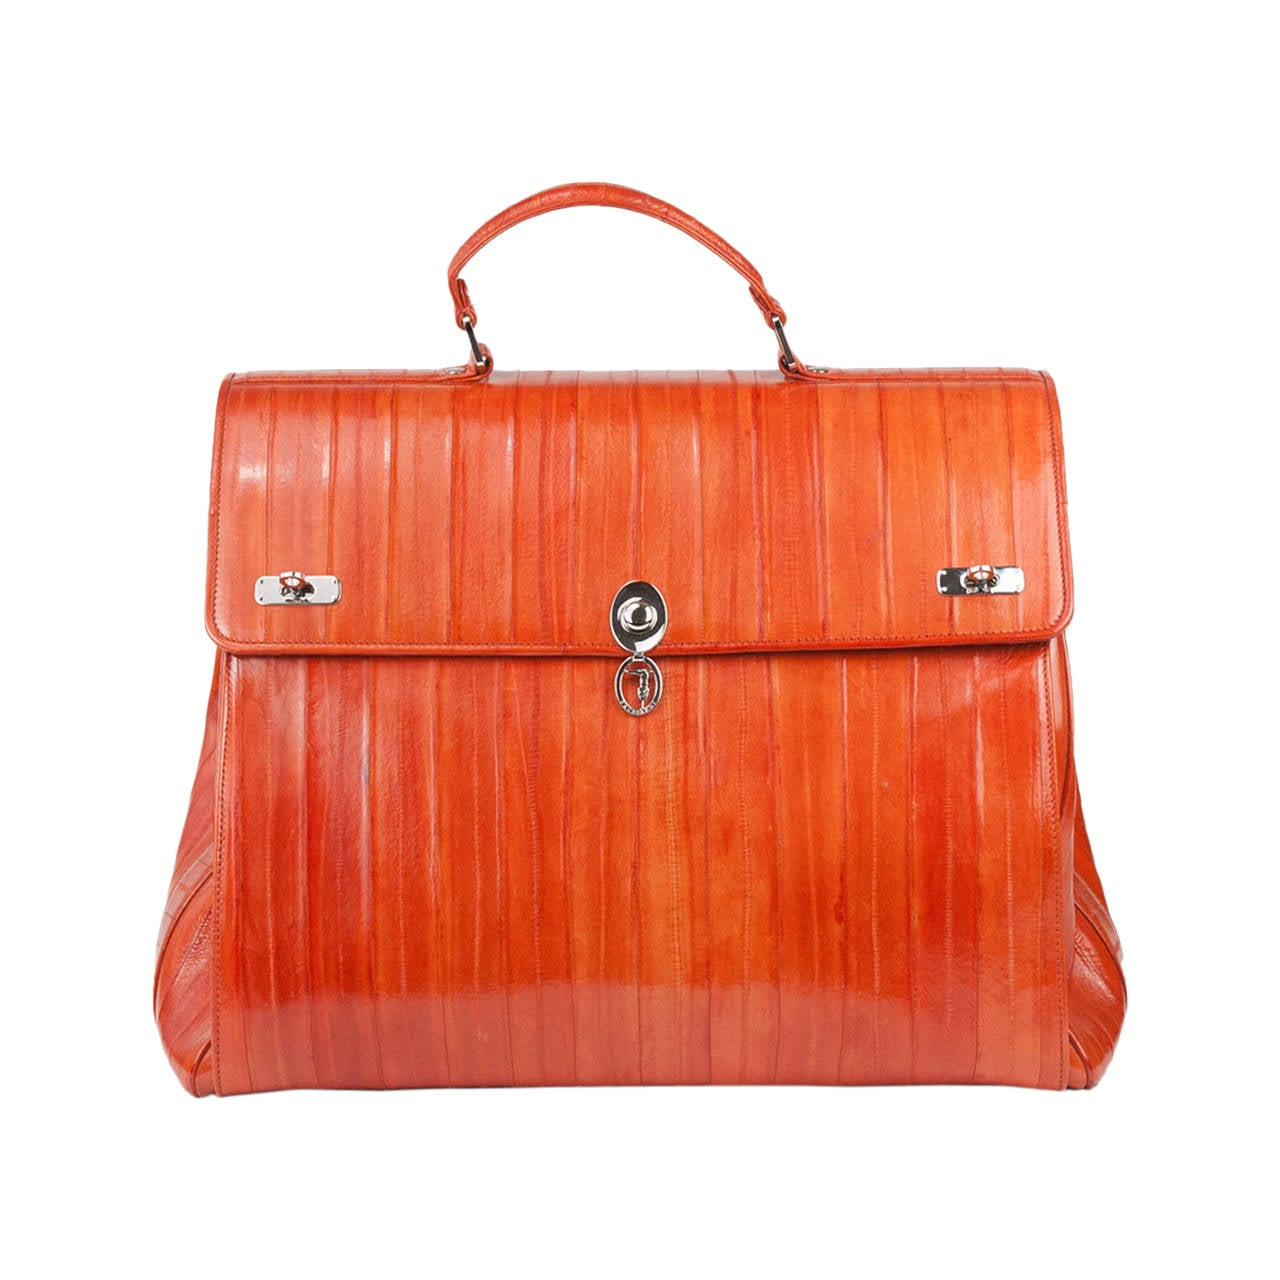 Trussardi Limited Edition Orange Eel Maxi Bag